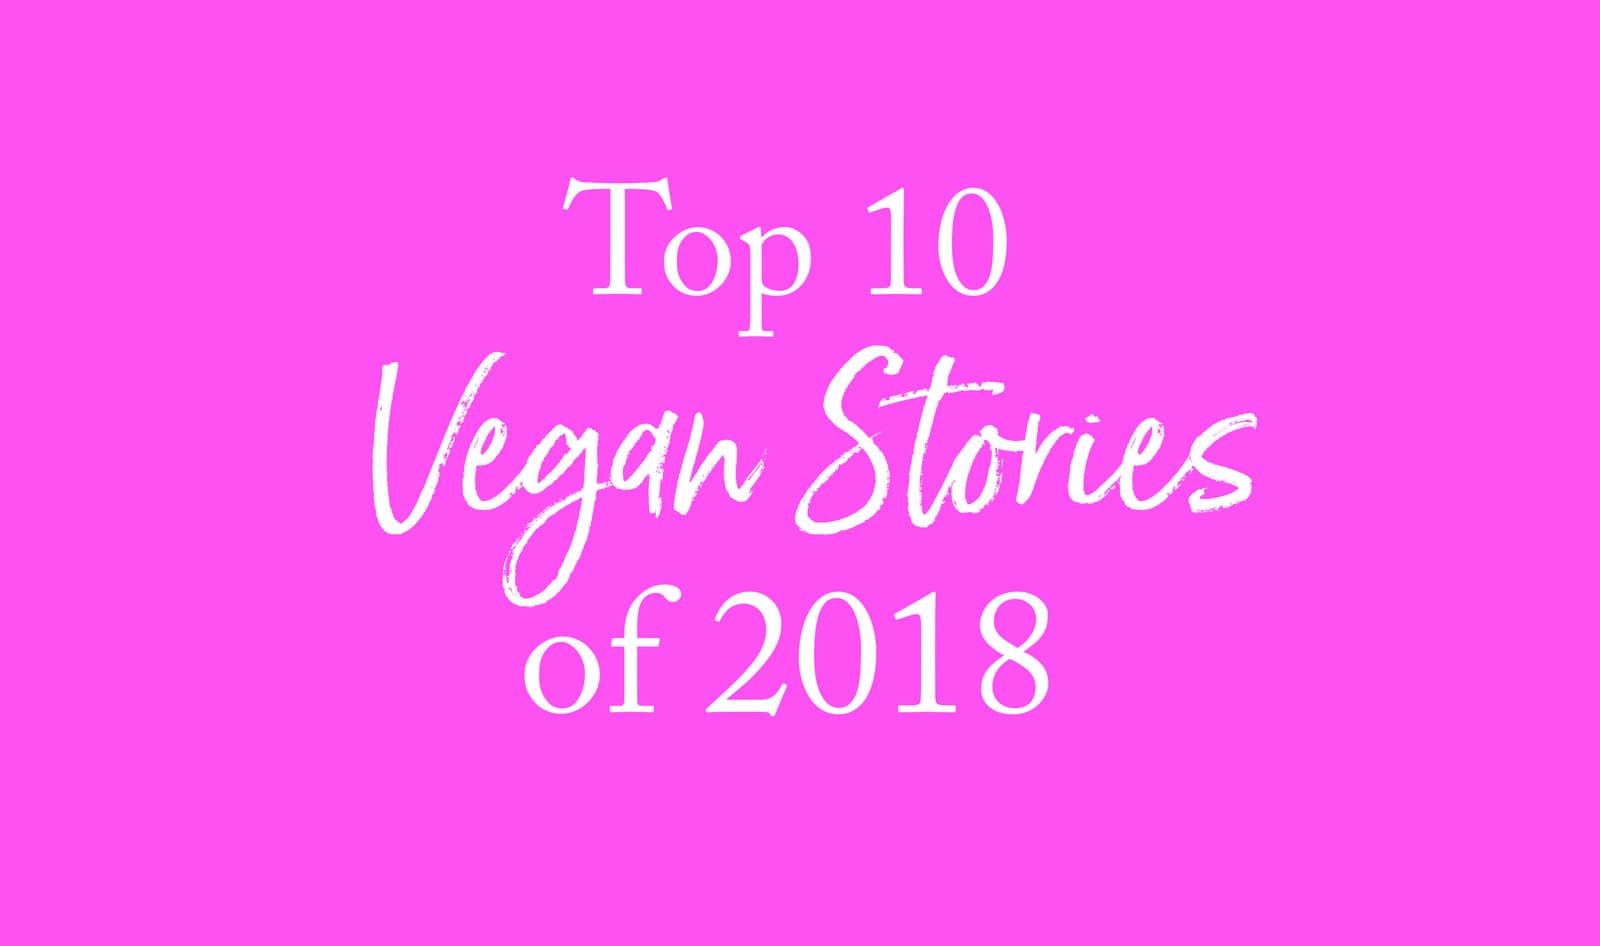 Top 10 Vegan Stories of 2018